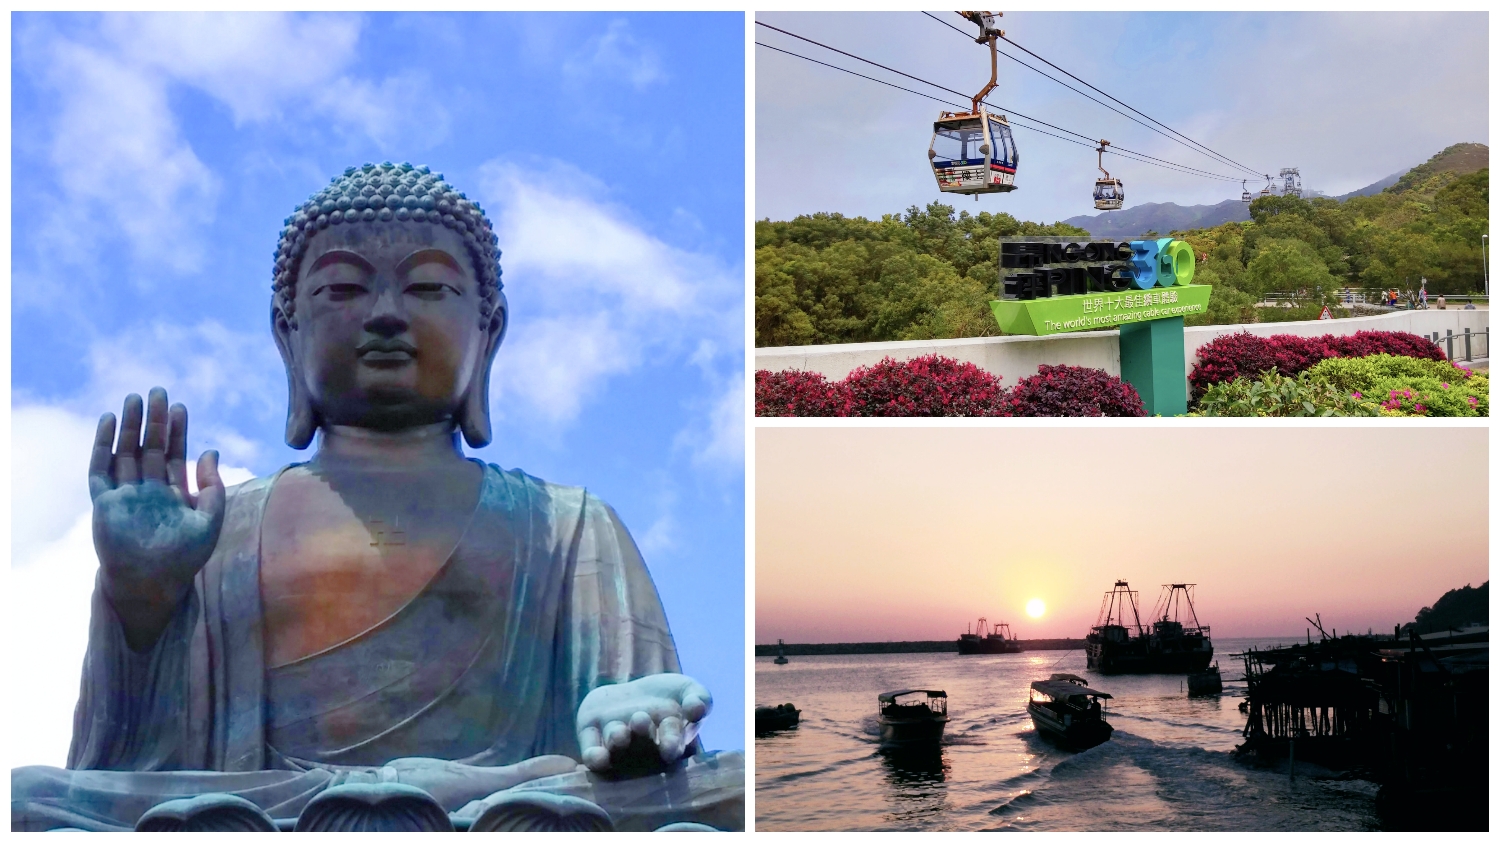 Frank reminds travelers: four mistakes at Hong Kong Lantau Island